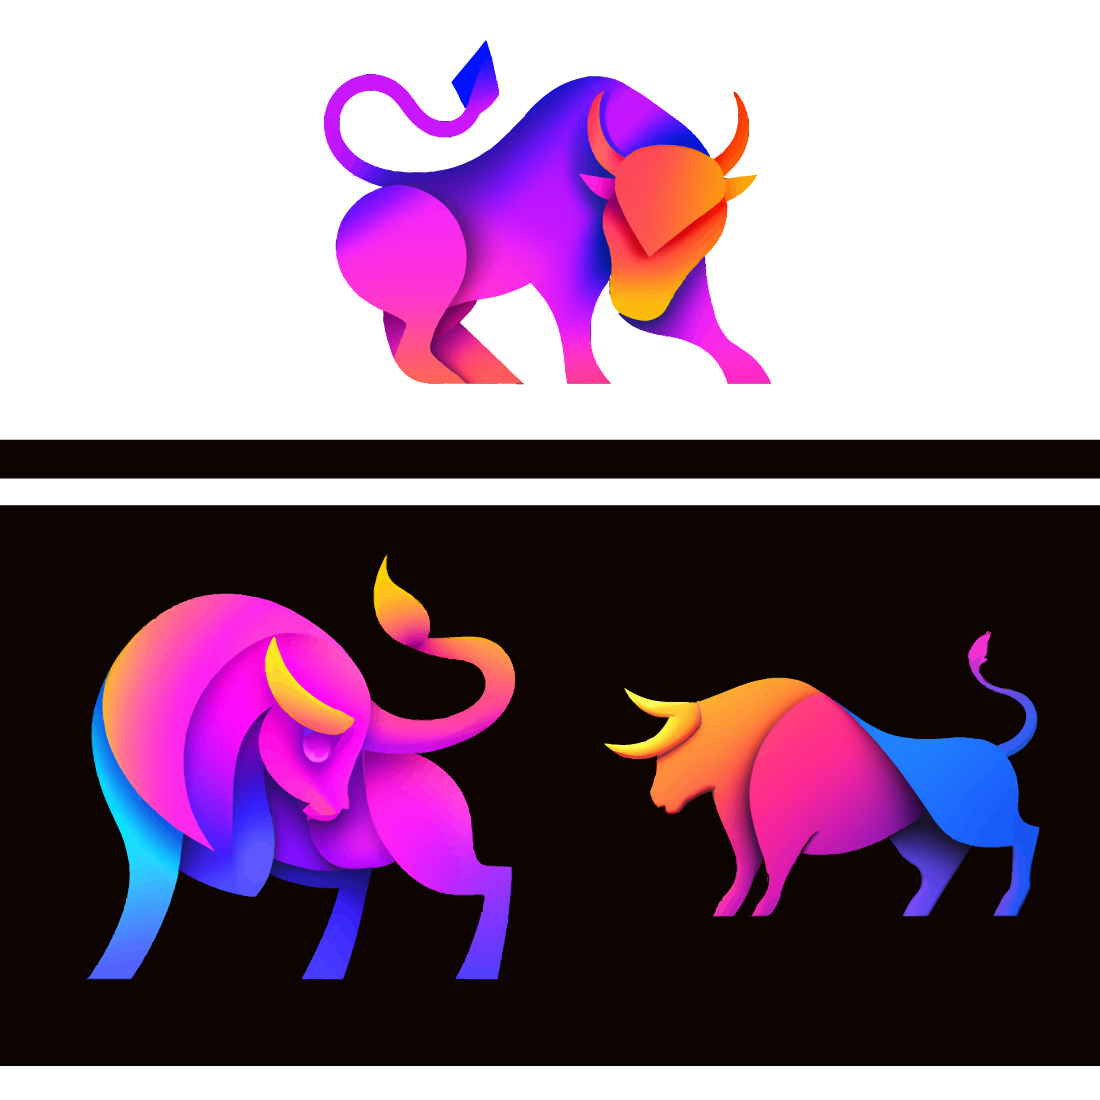 3 multicolored bull gaming logos preview image.